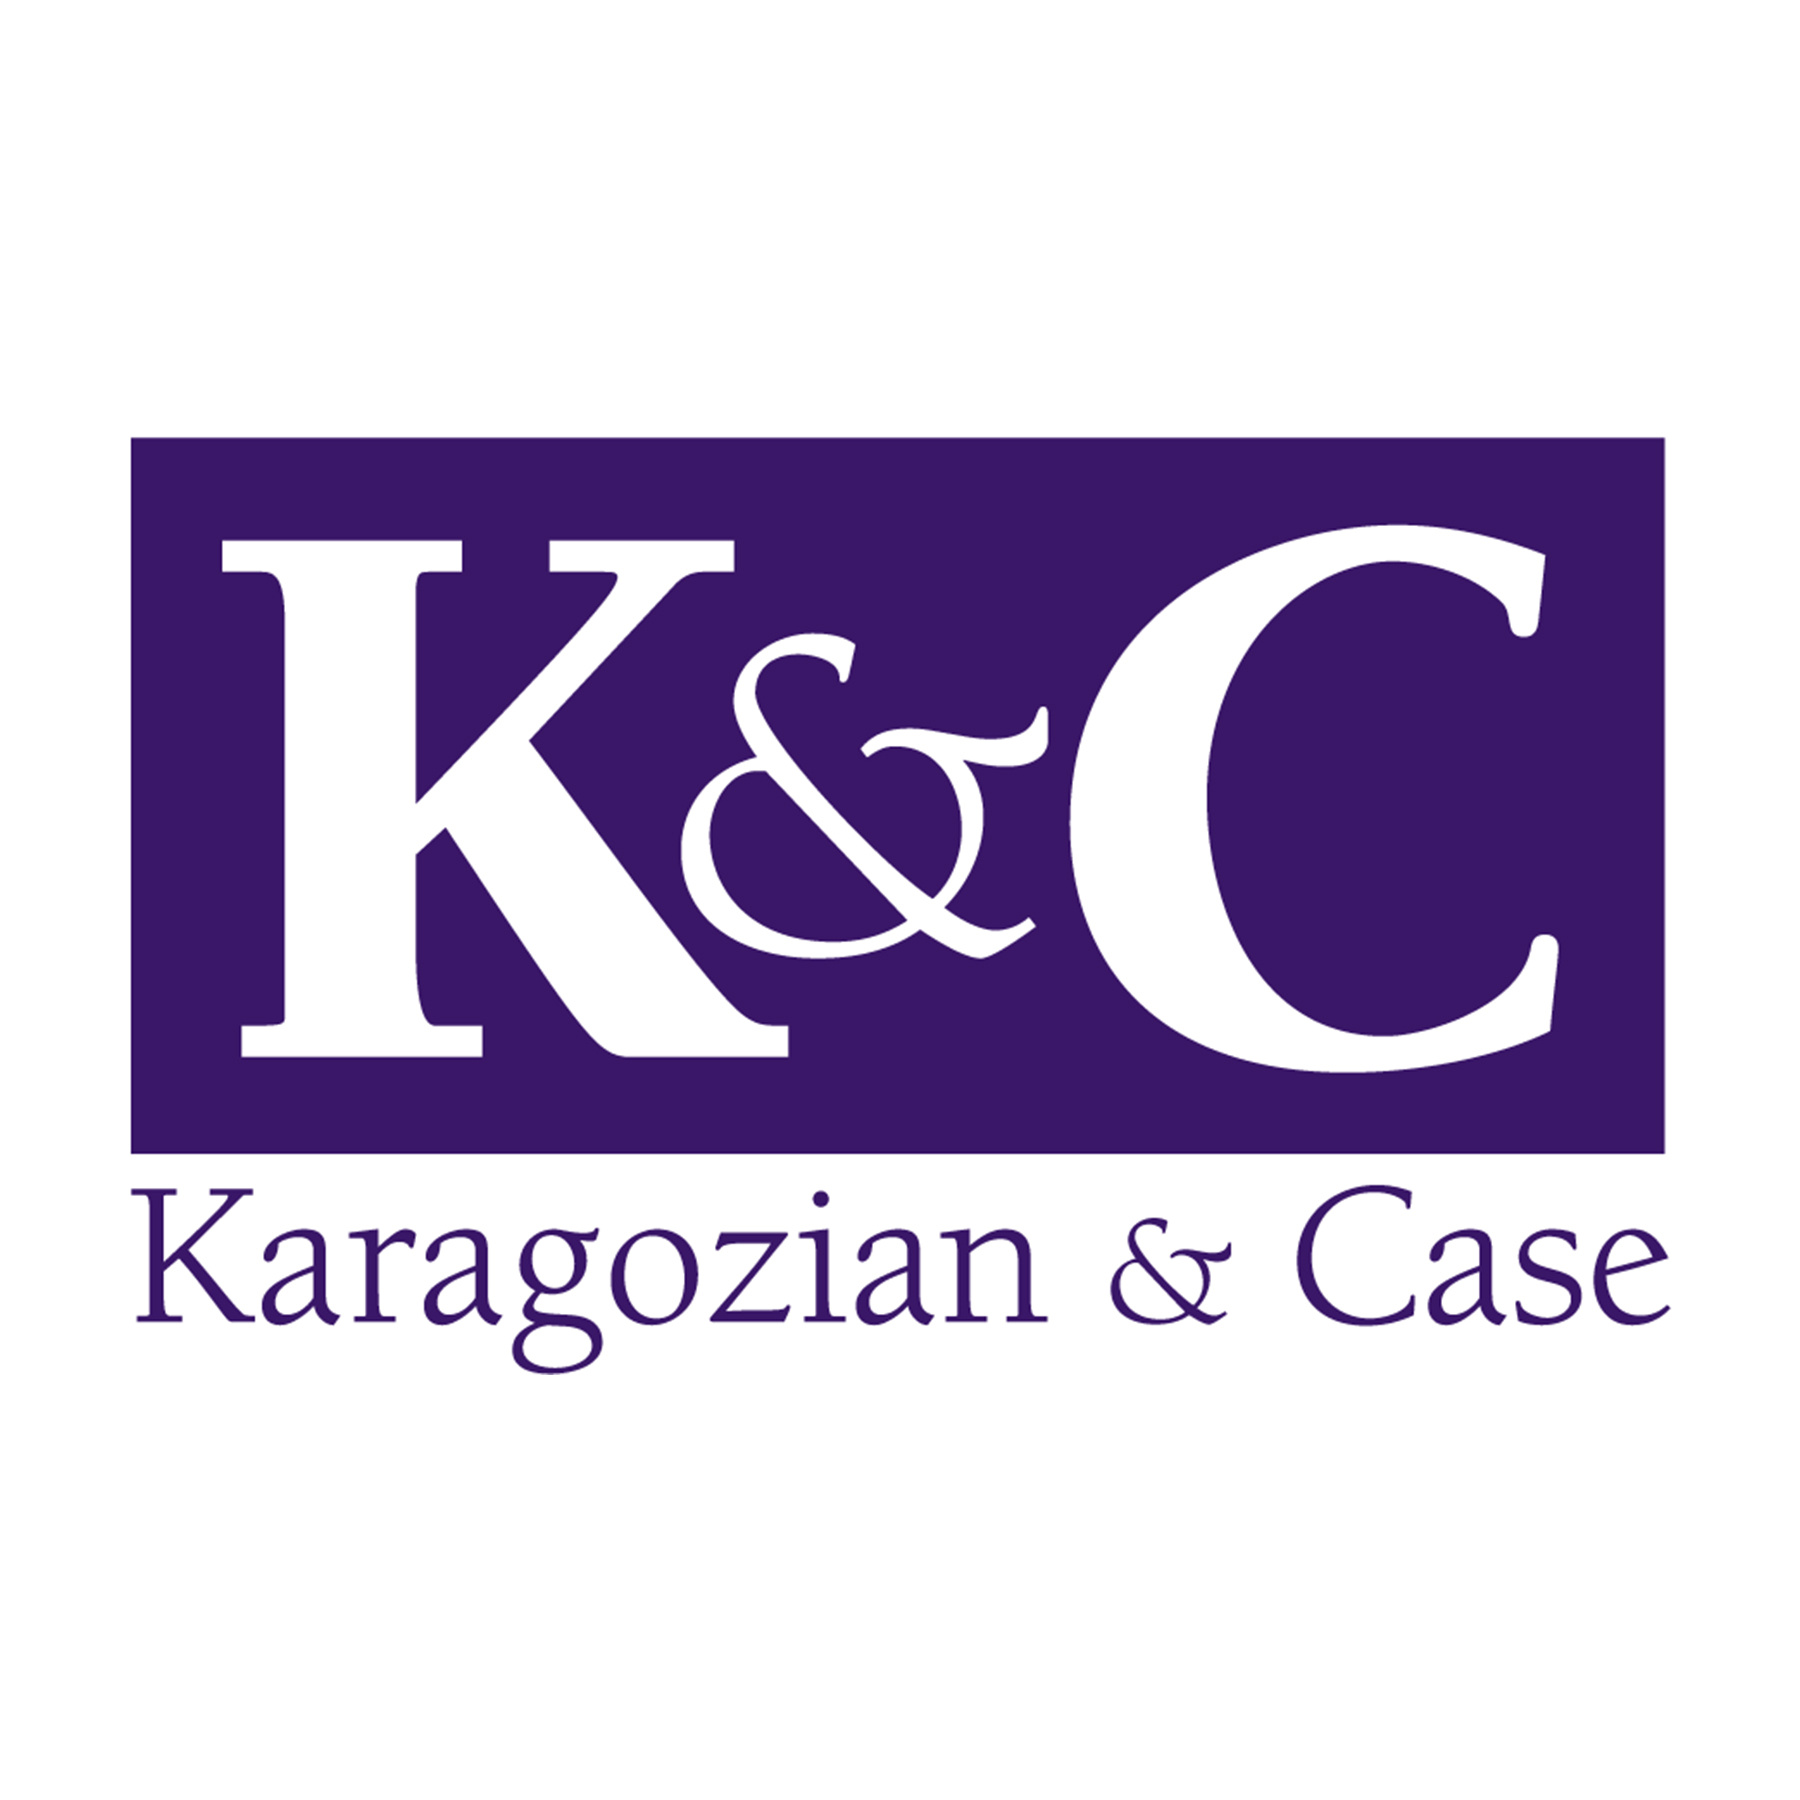 Karagozian & Case Engineering Company Logo